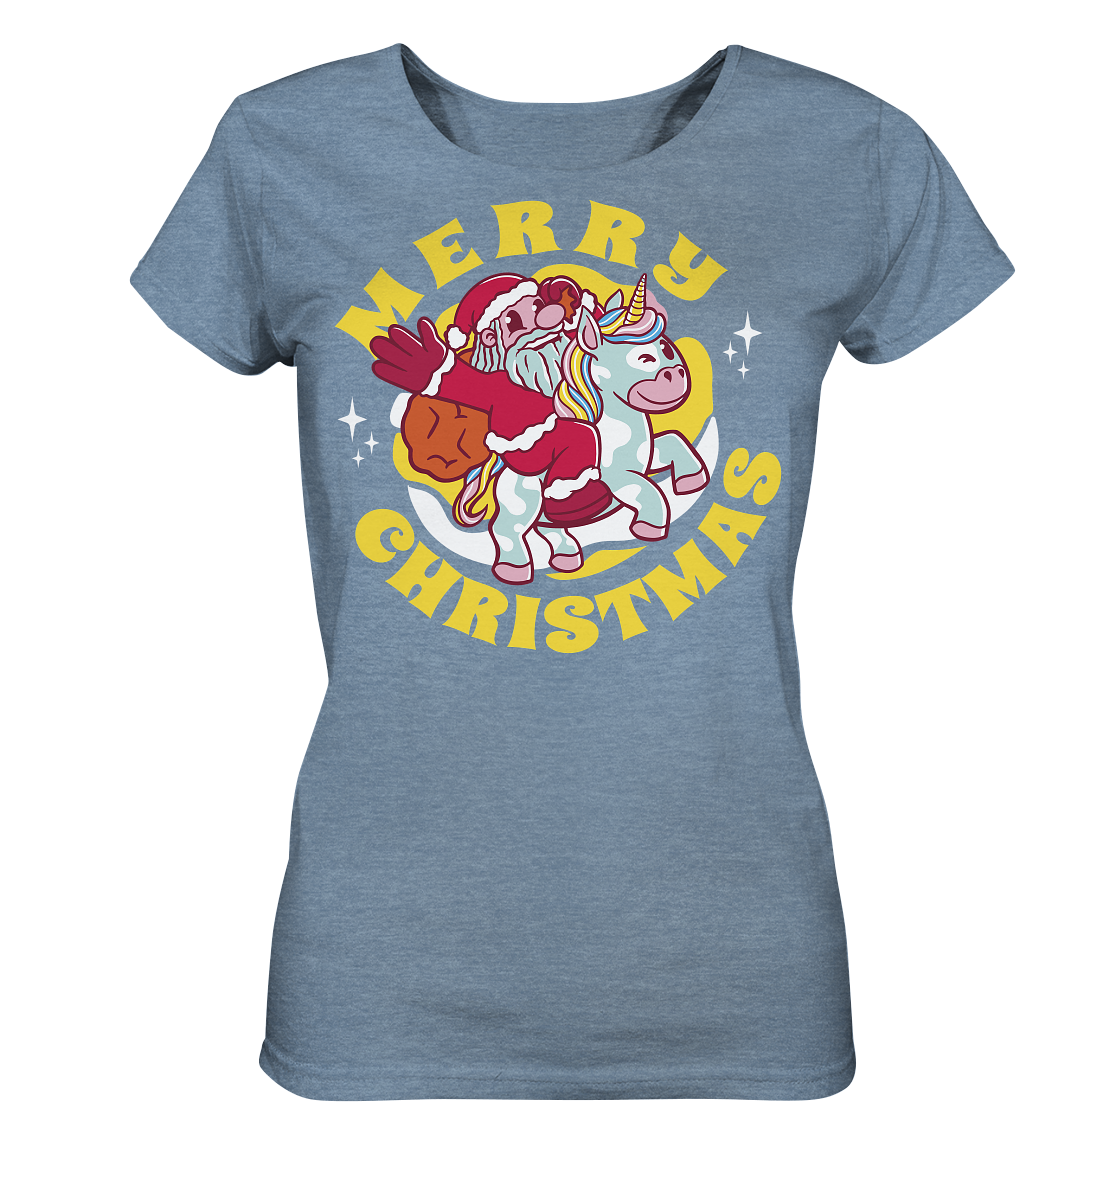 Riding Santa Claus, Merry Christmas, Merry Christmas - Ladies Organic Shirt (mottled)